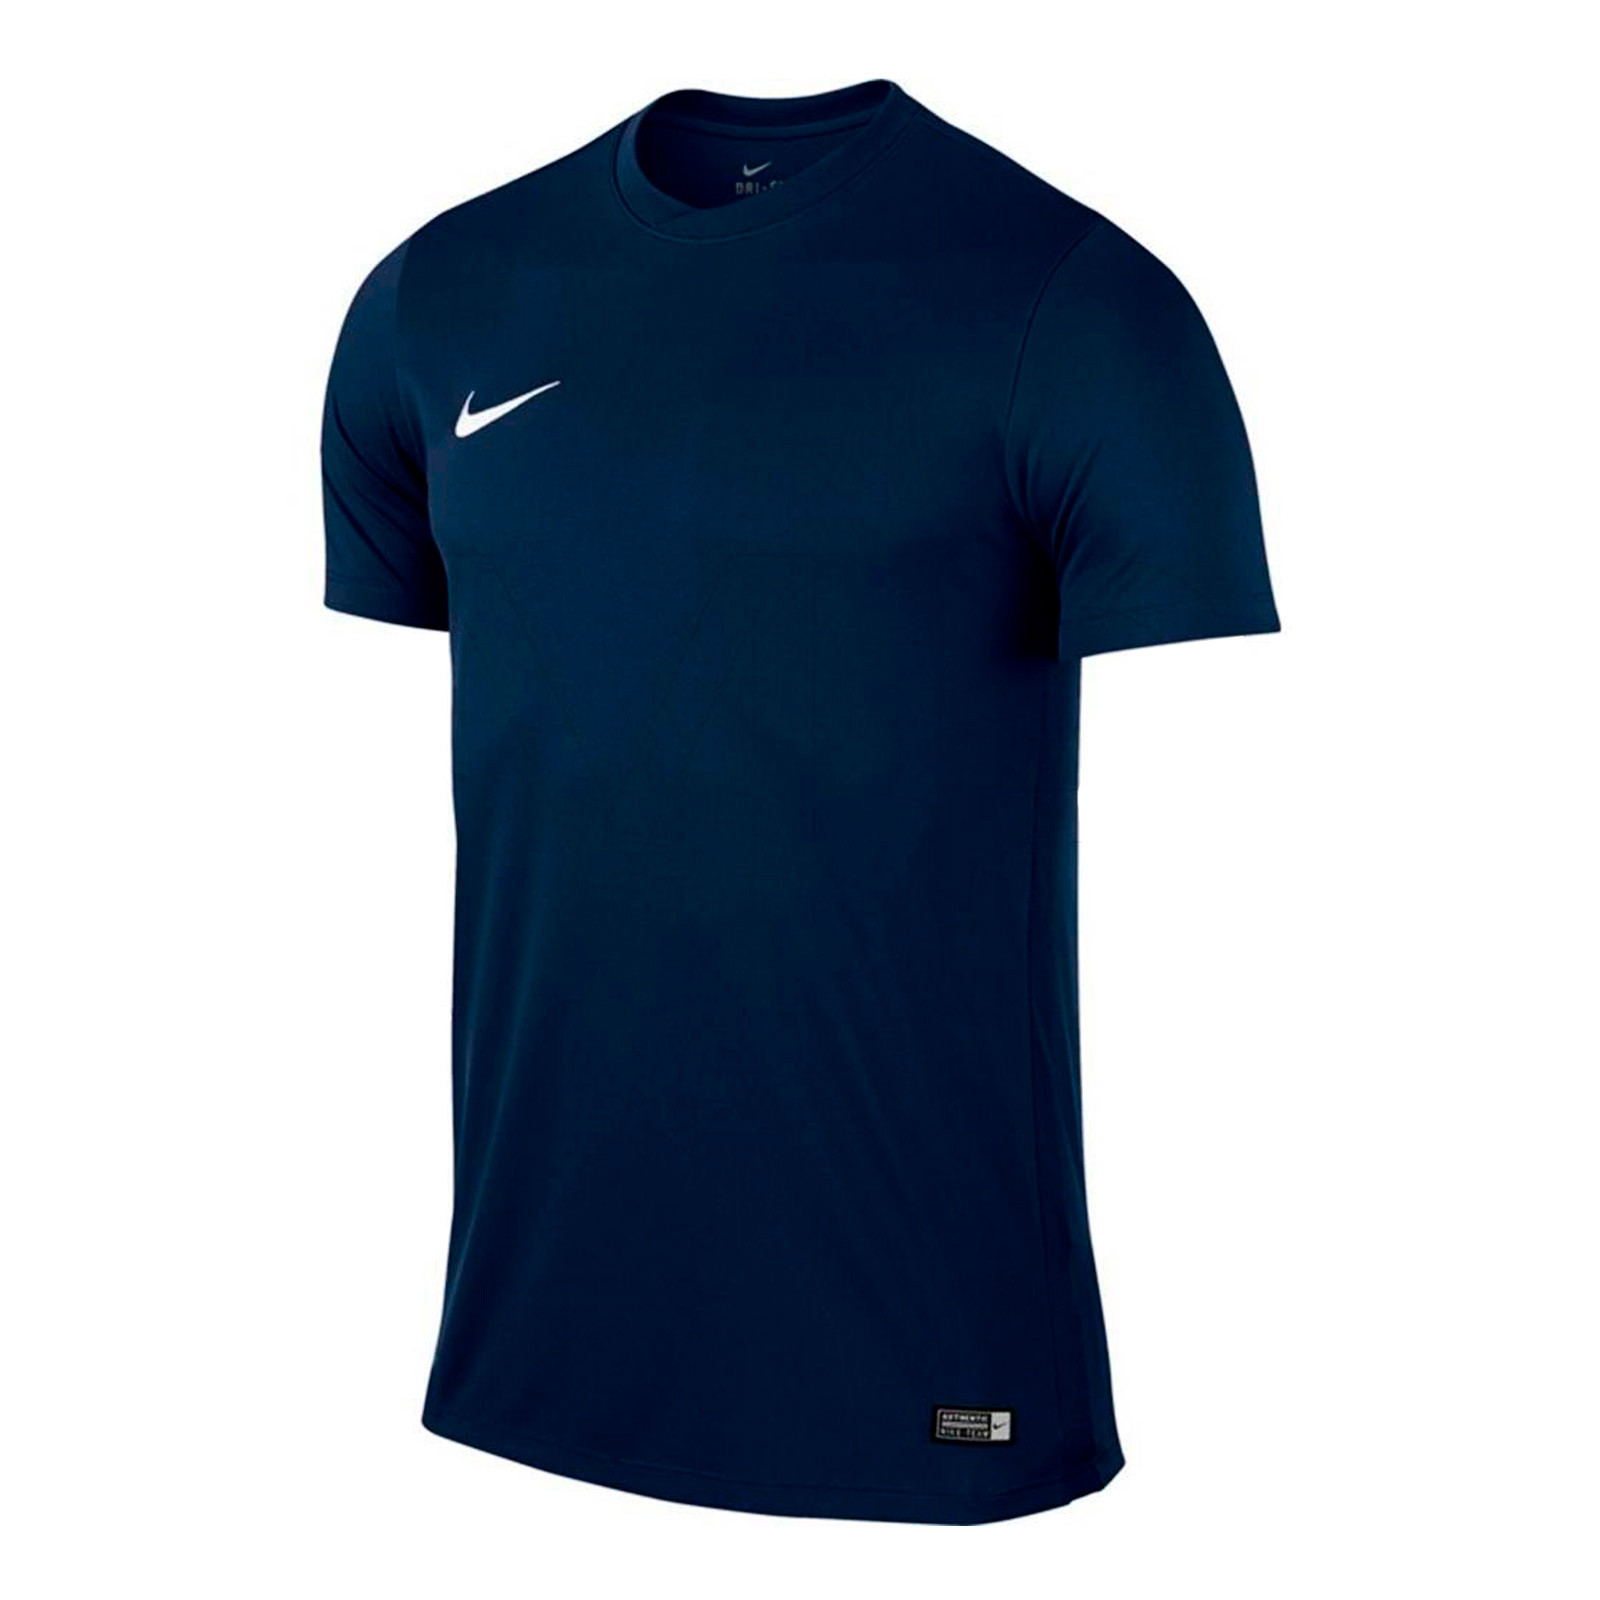 Camiseta Nike 6 niño azul marino |